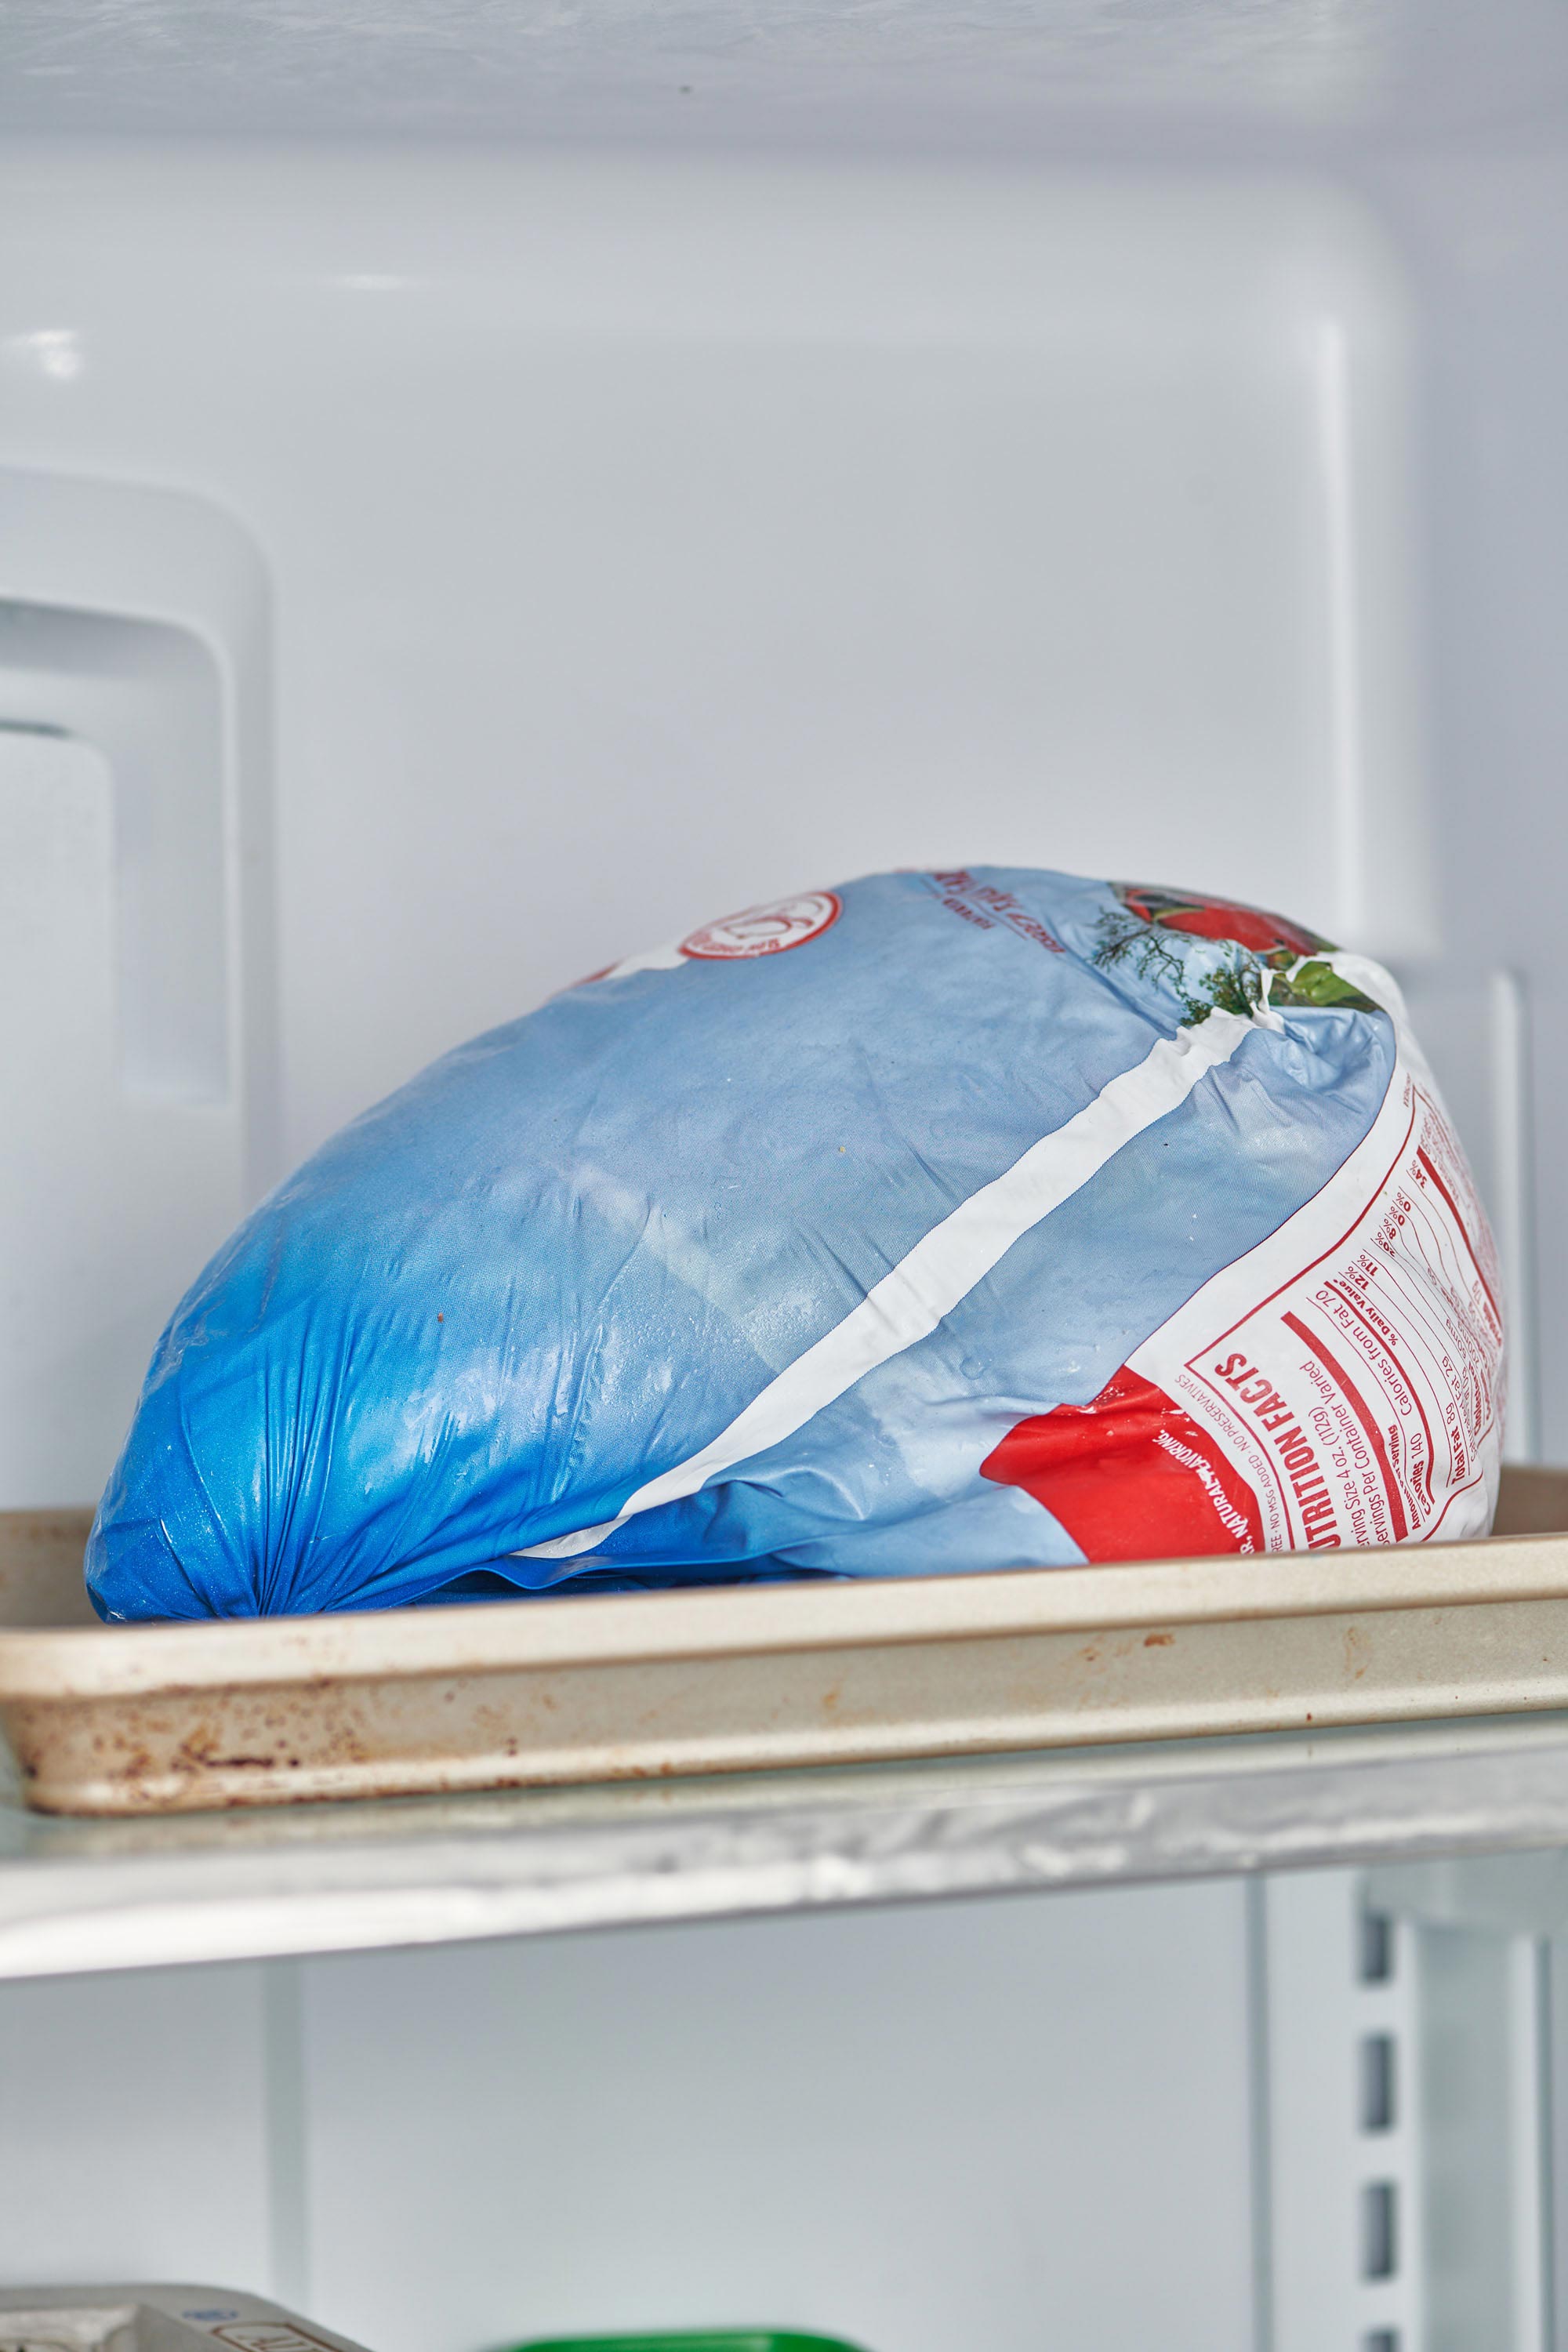 Turkey breast thawing in the fridge.